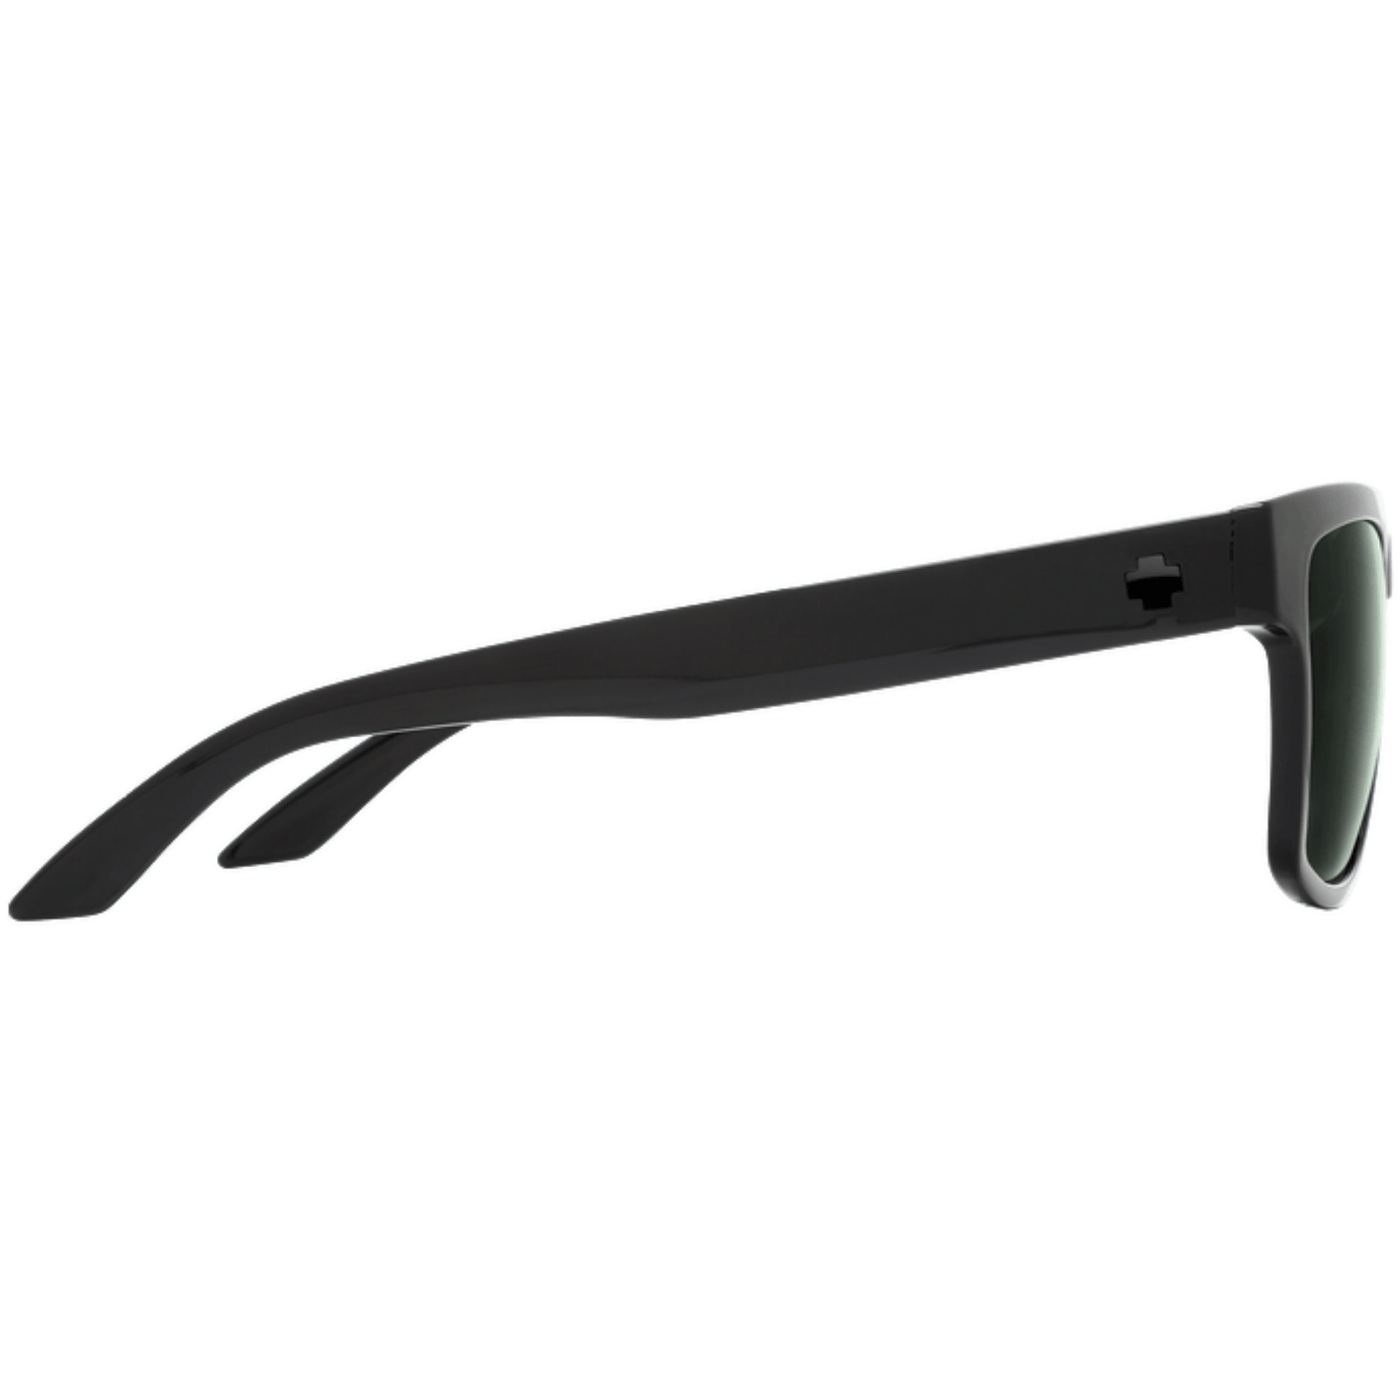 SPY HAIGHT 2 Sunglasses Happy Lens - SOSI Black 8Lines Shop - Fast Shipping